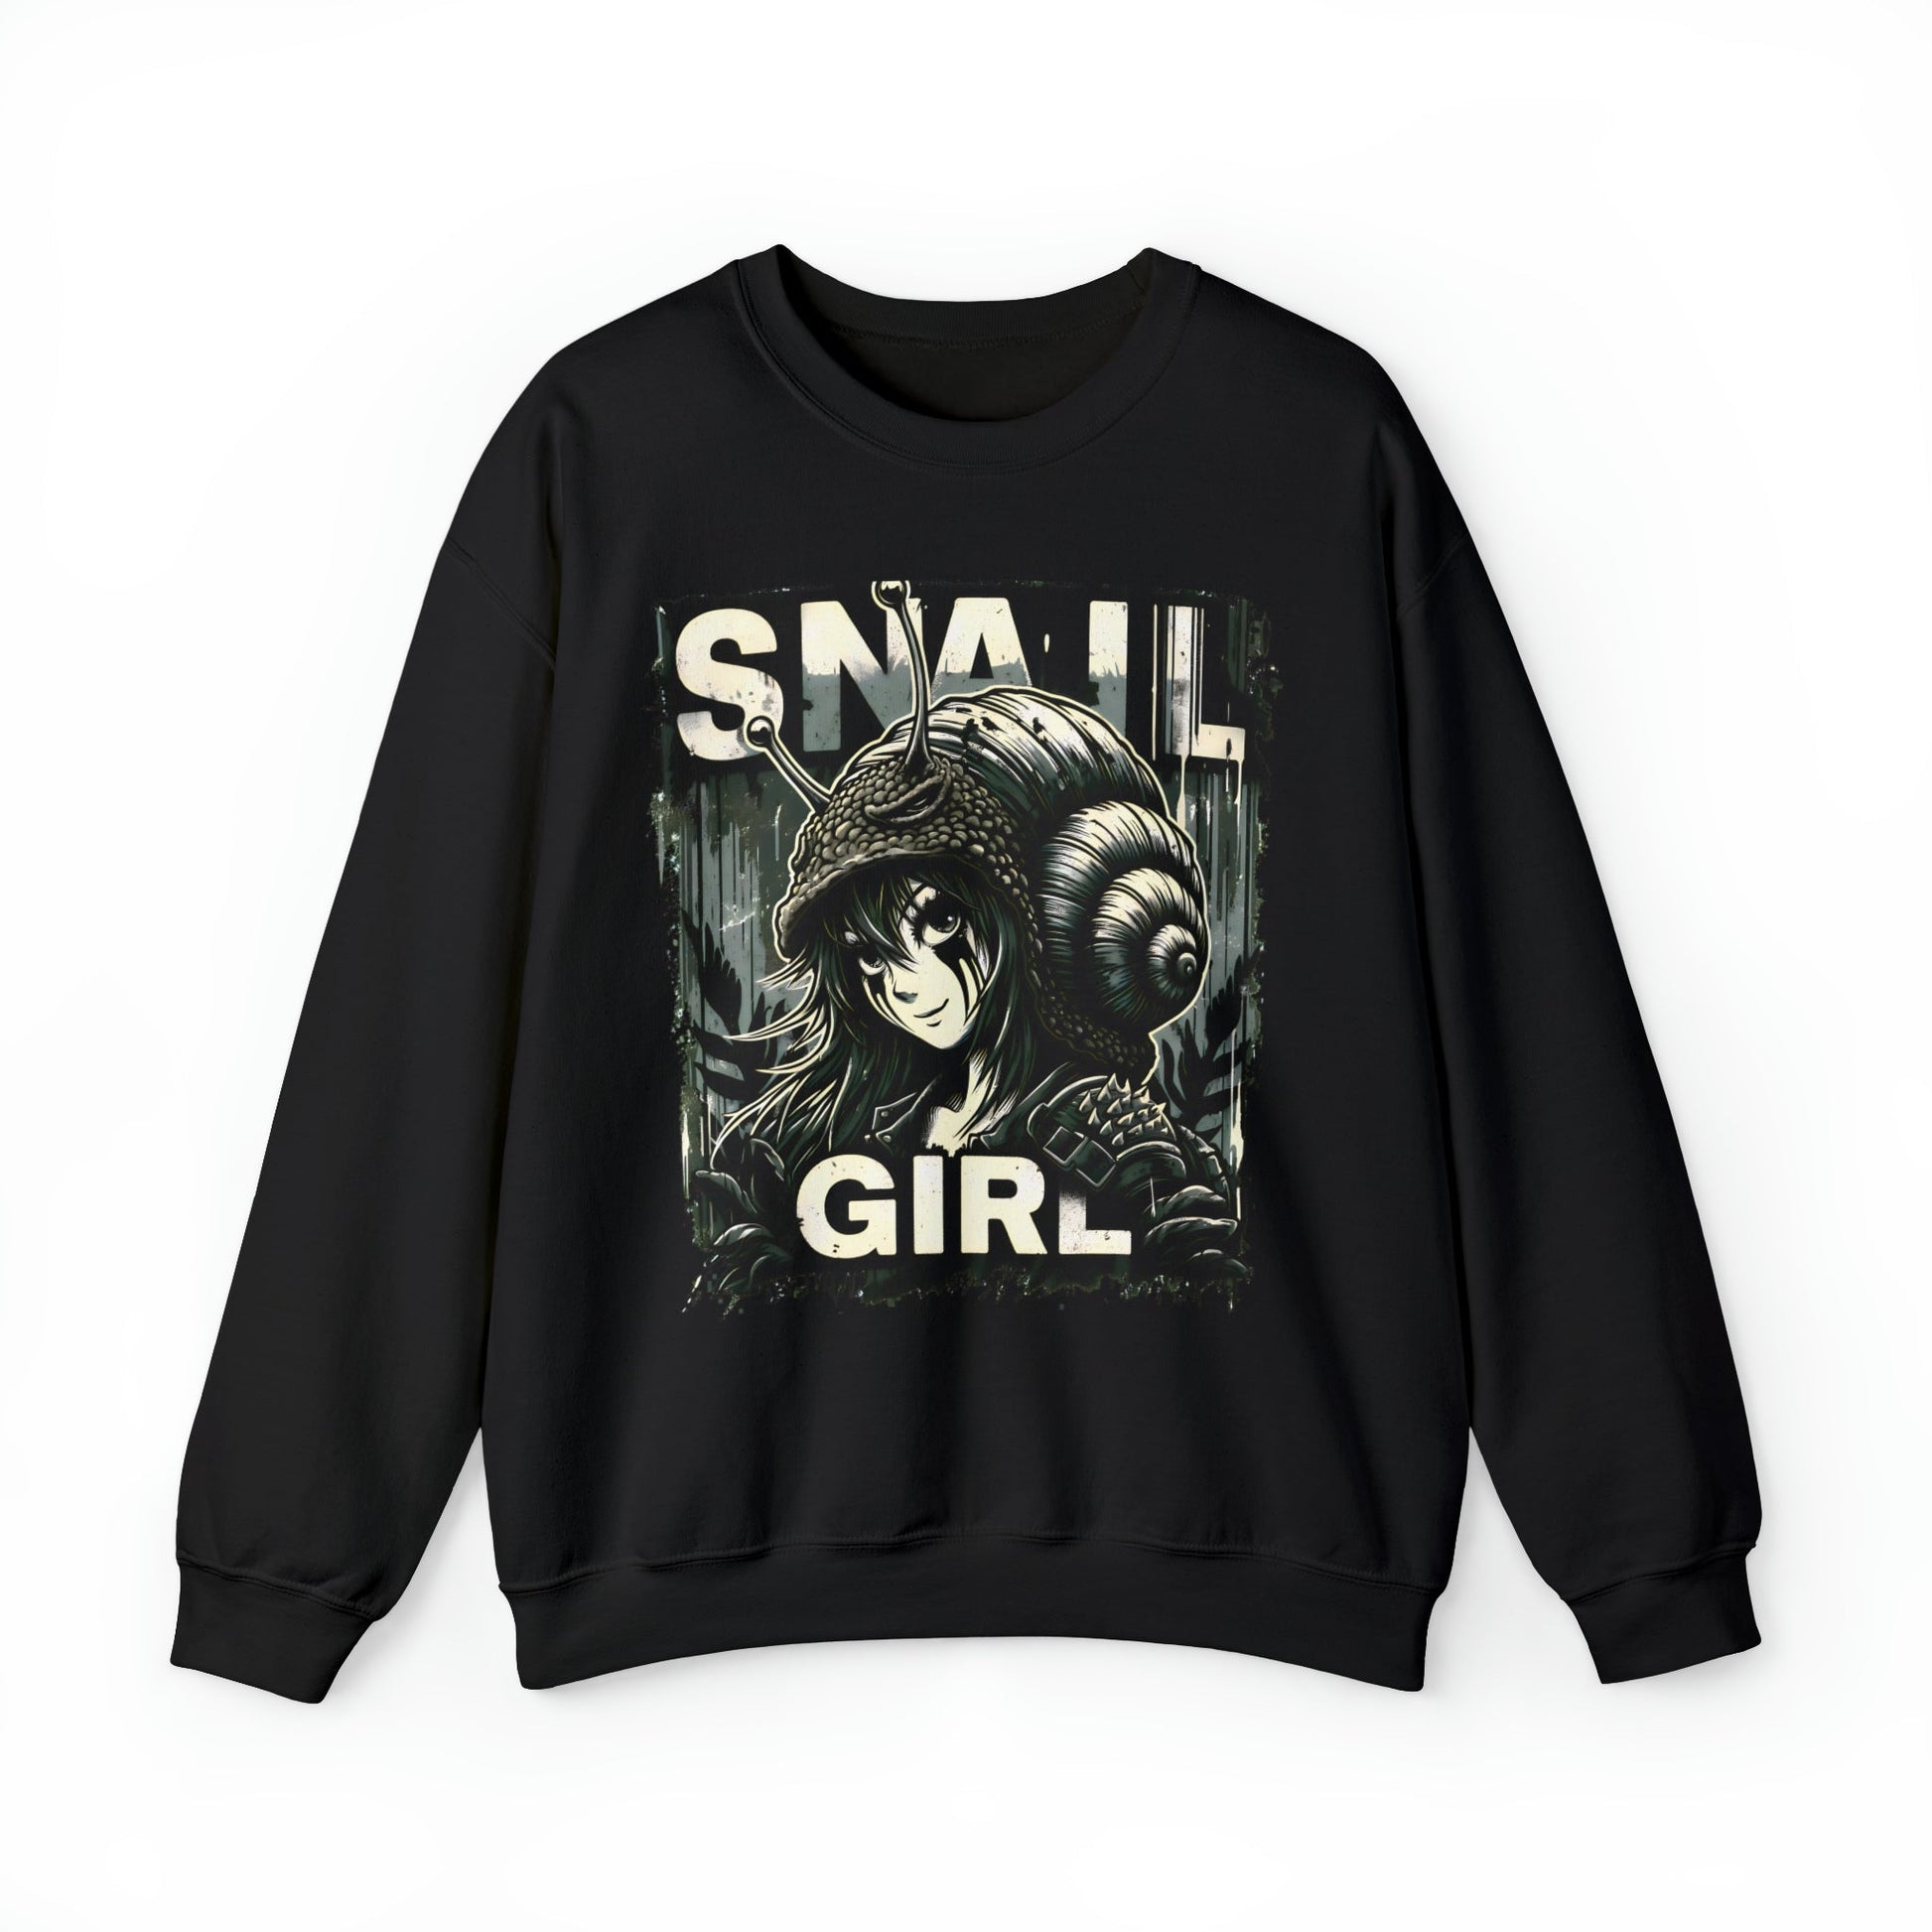 Snail Girl Sweatshirt